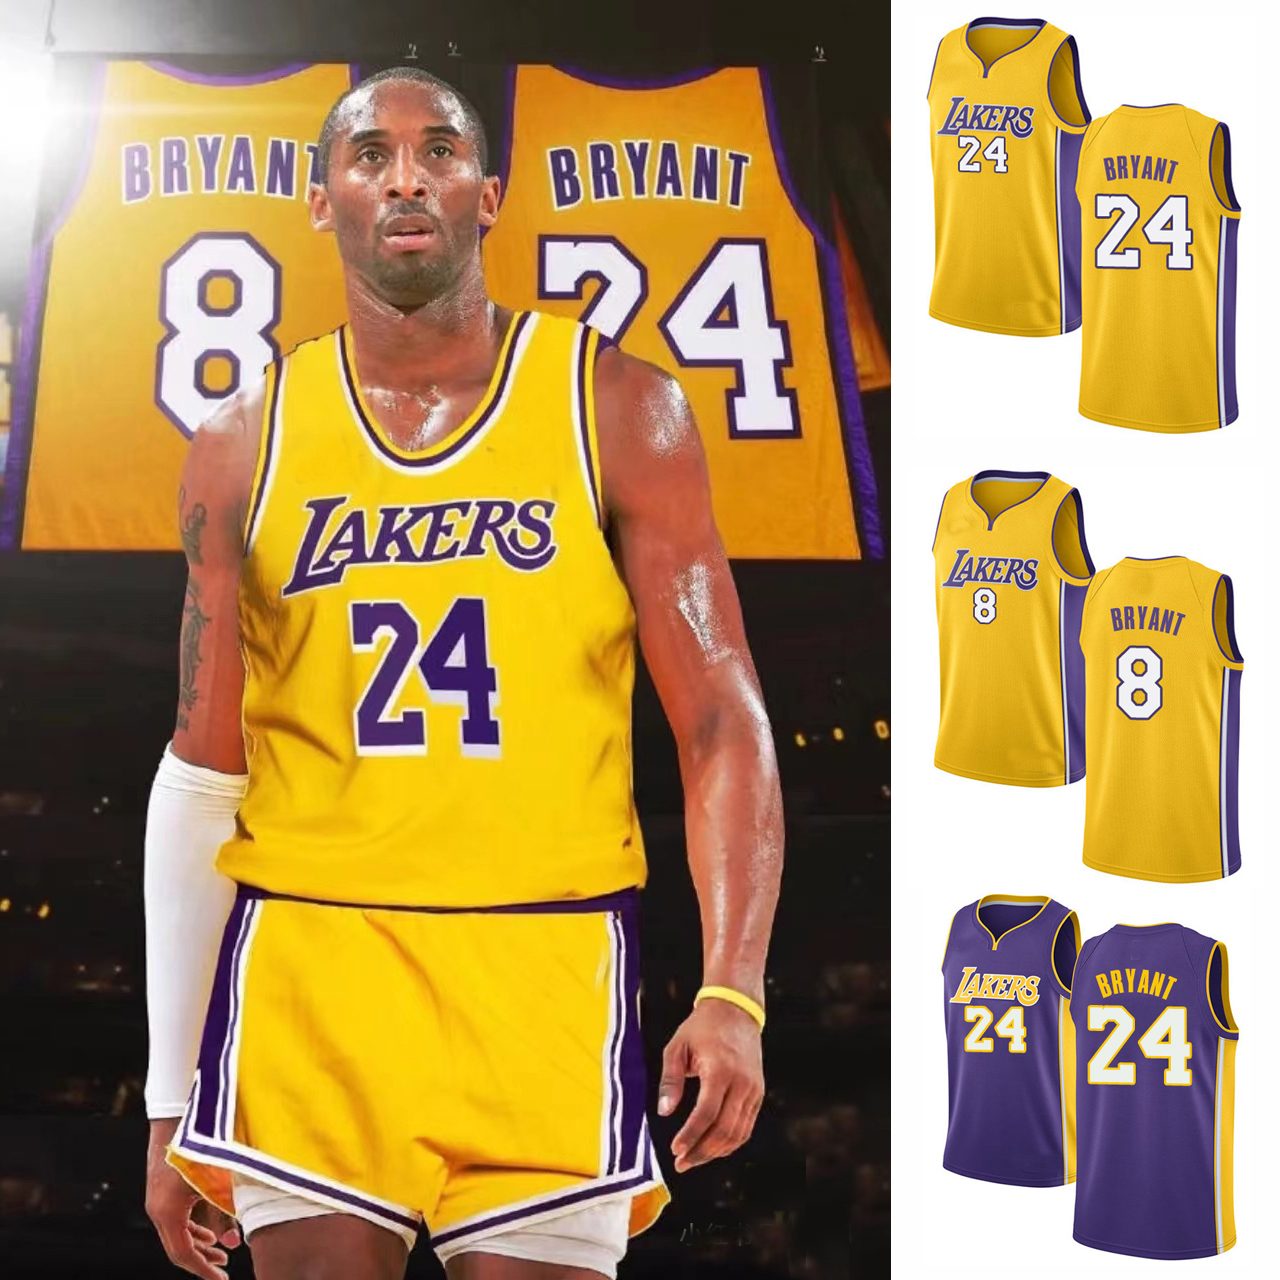 Lakers Kobe Bryant No. 24 Jersey No. 8 basketball shirt No. 23 James quick drying vest No. 6 pants suit mens and womens